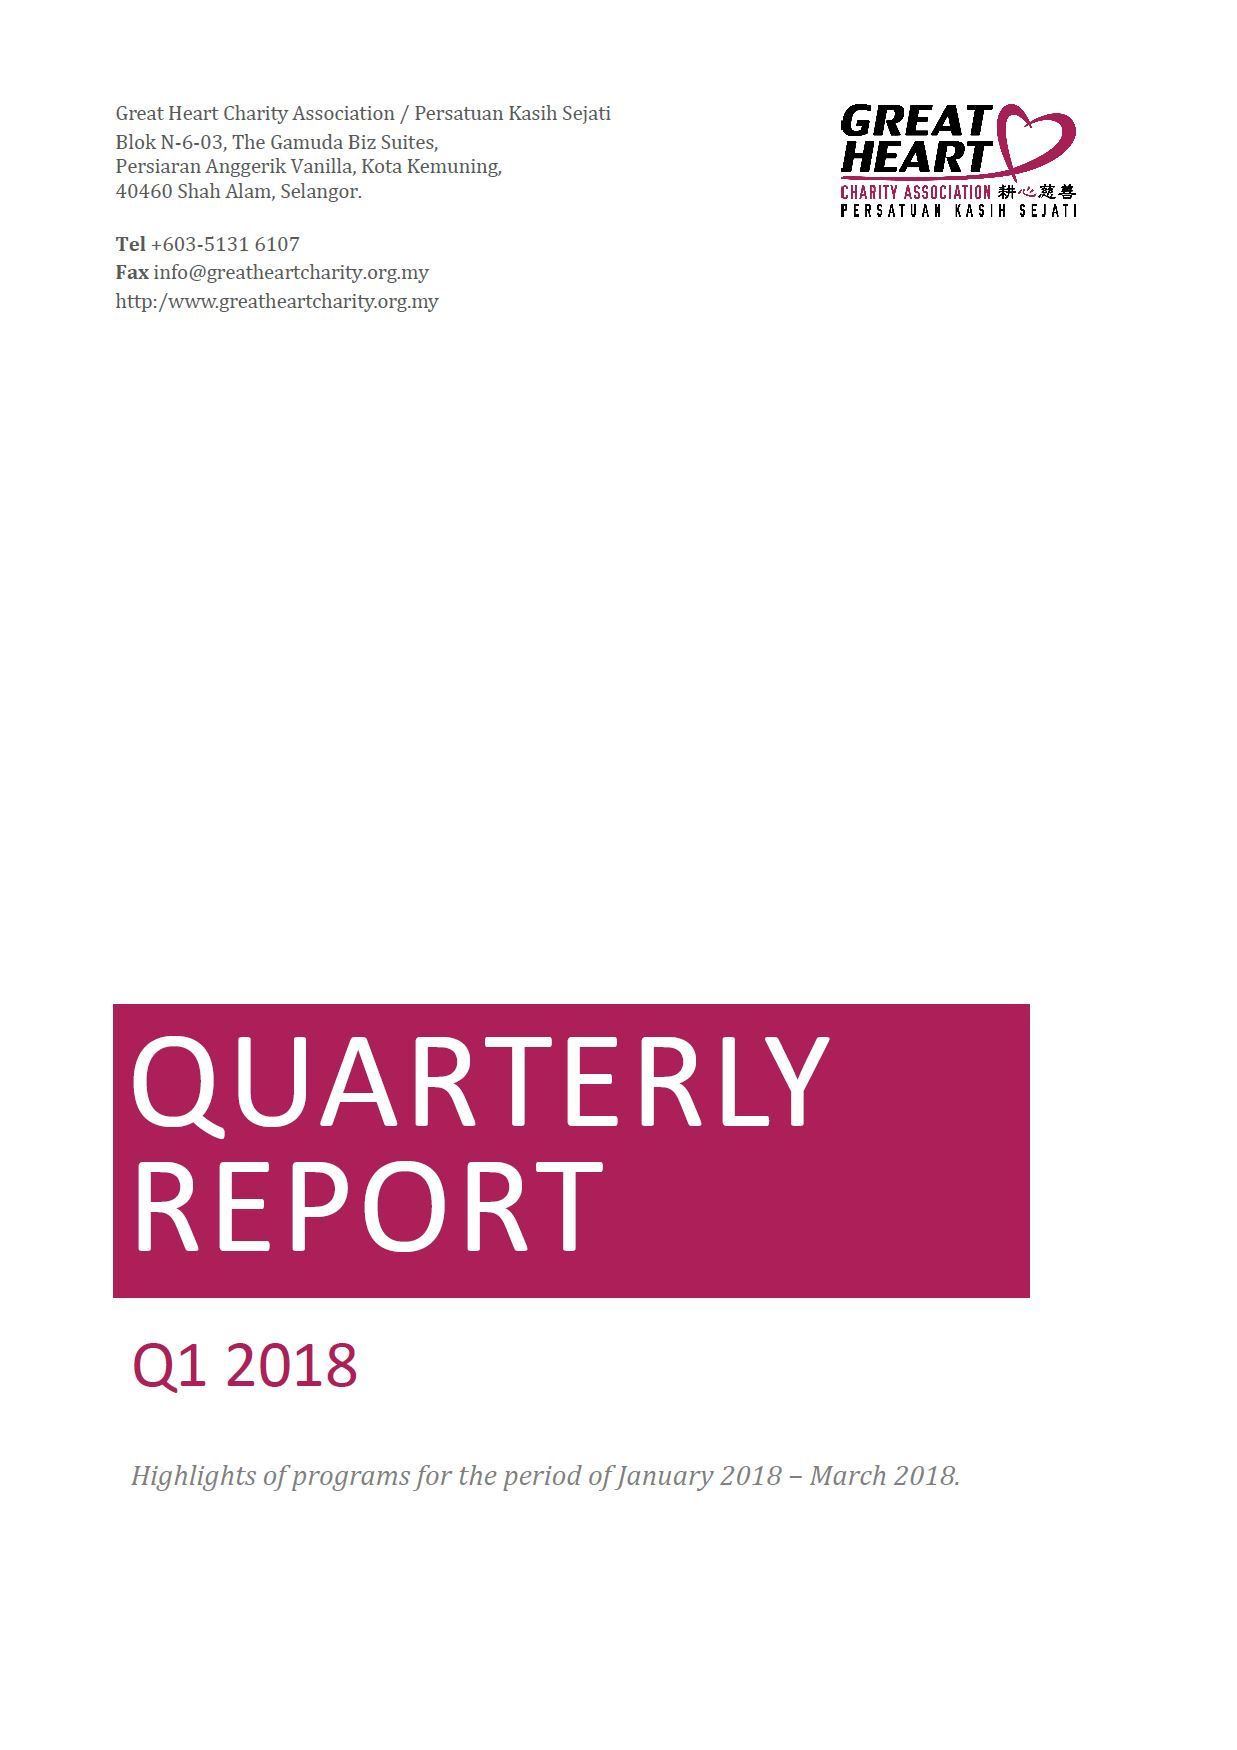 Great Heart Quarterly Report - Quarter 1 - 2018